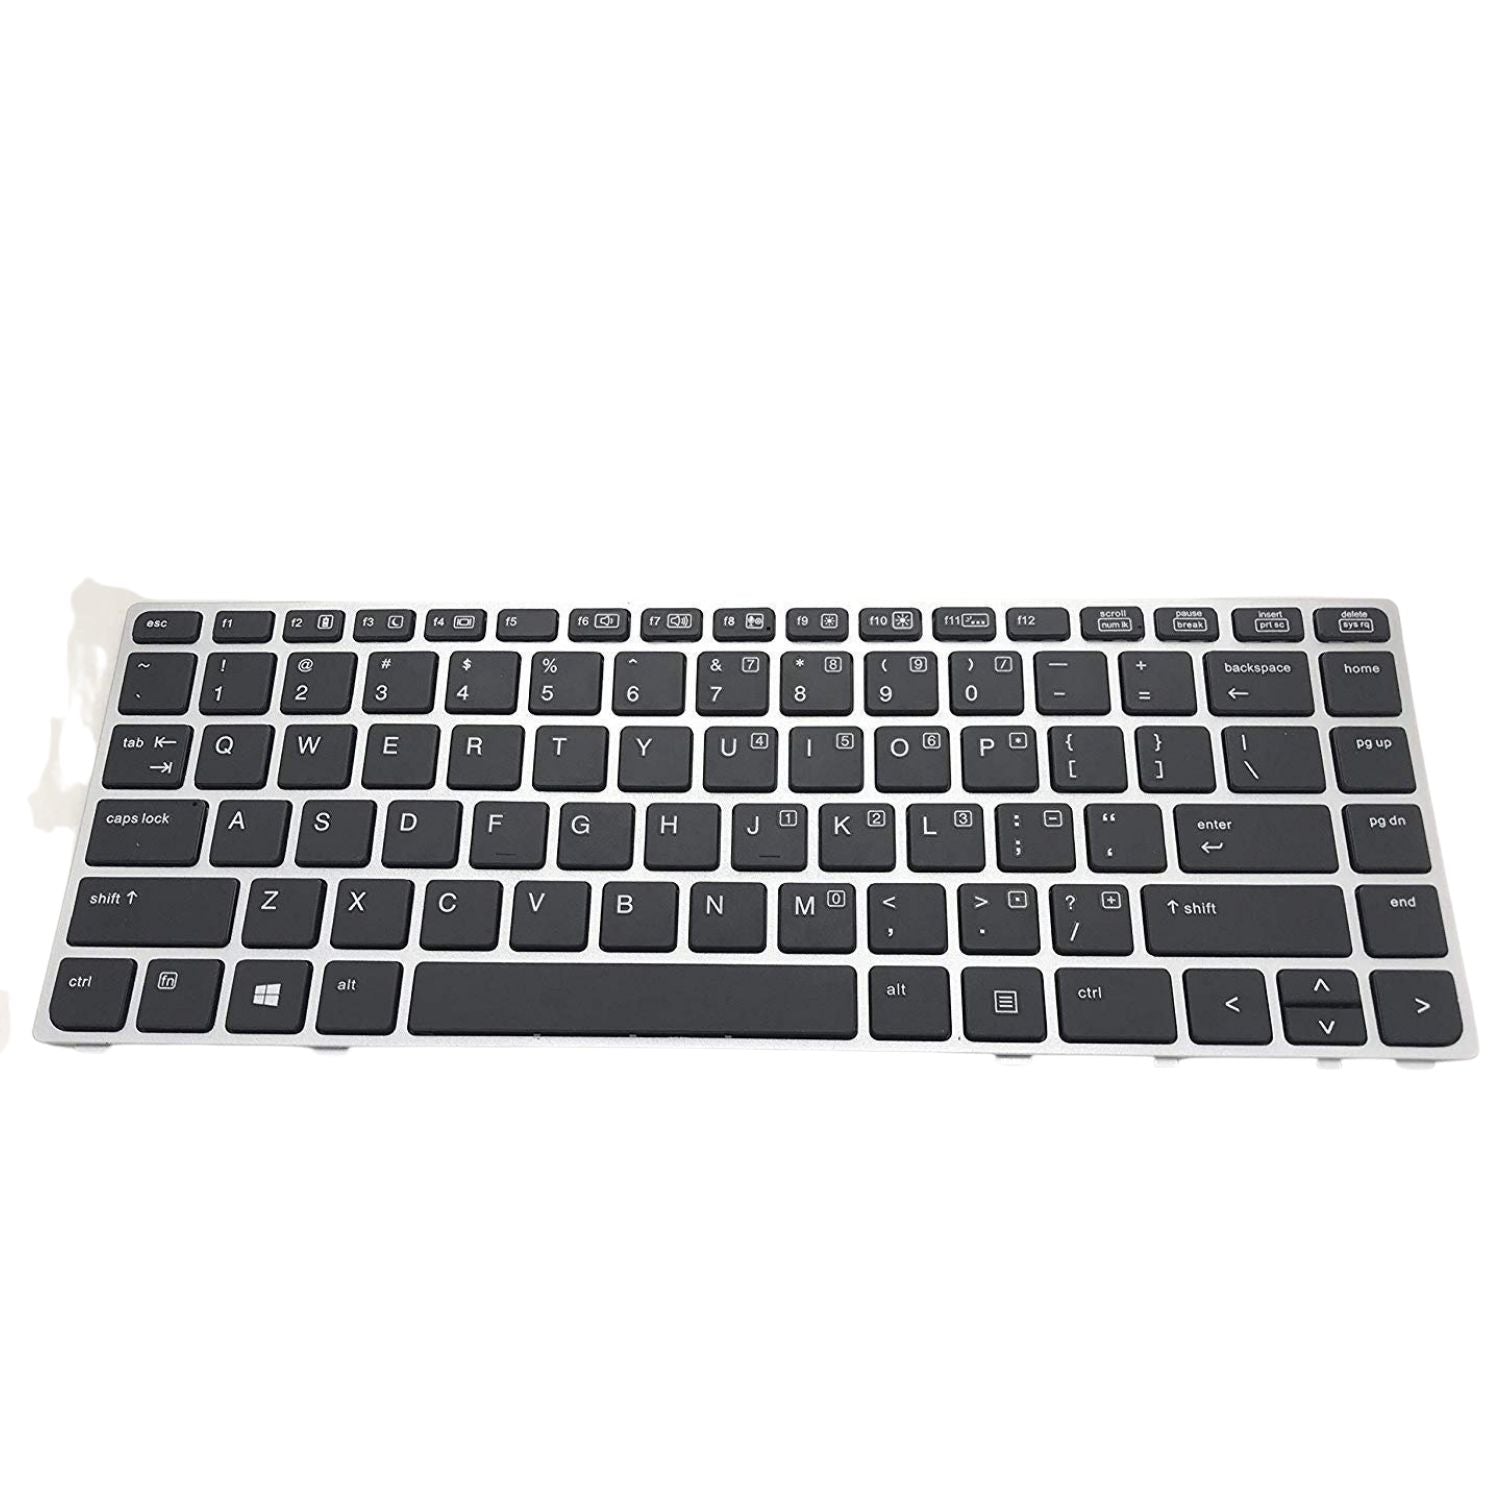 HP Laptop Keyboard For 702843-001 EliteBook Folio 9470M 9470 9480 9480M